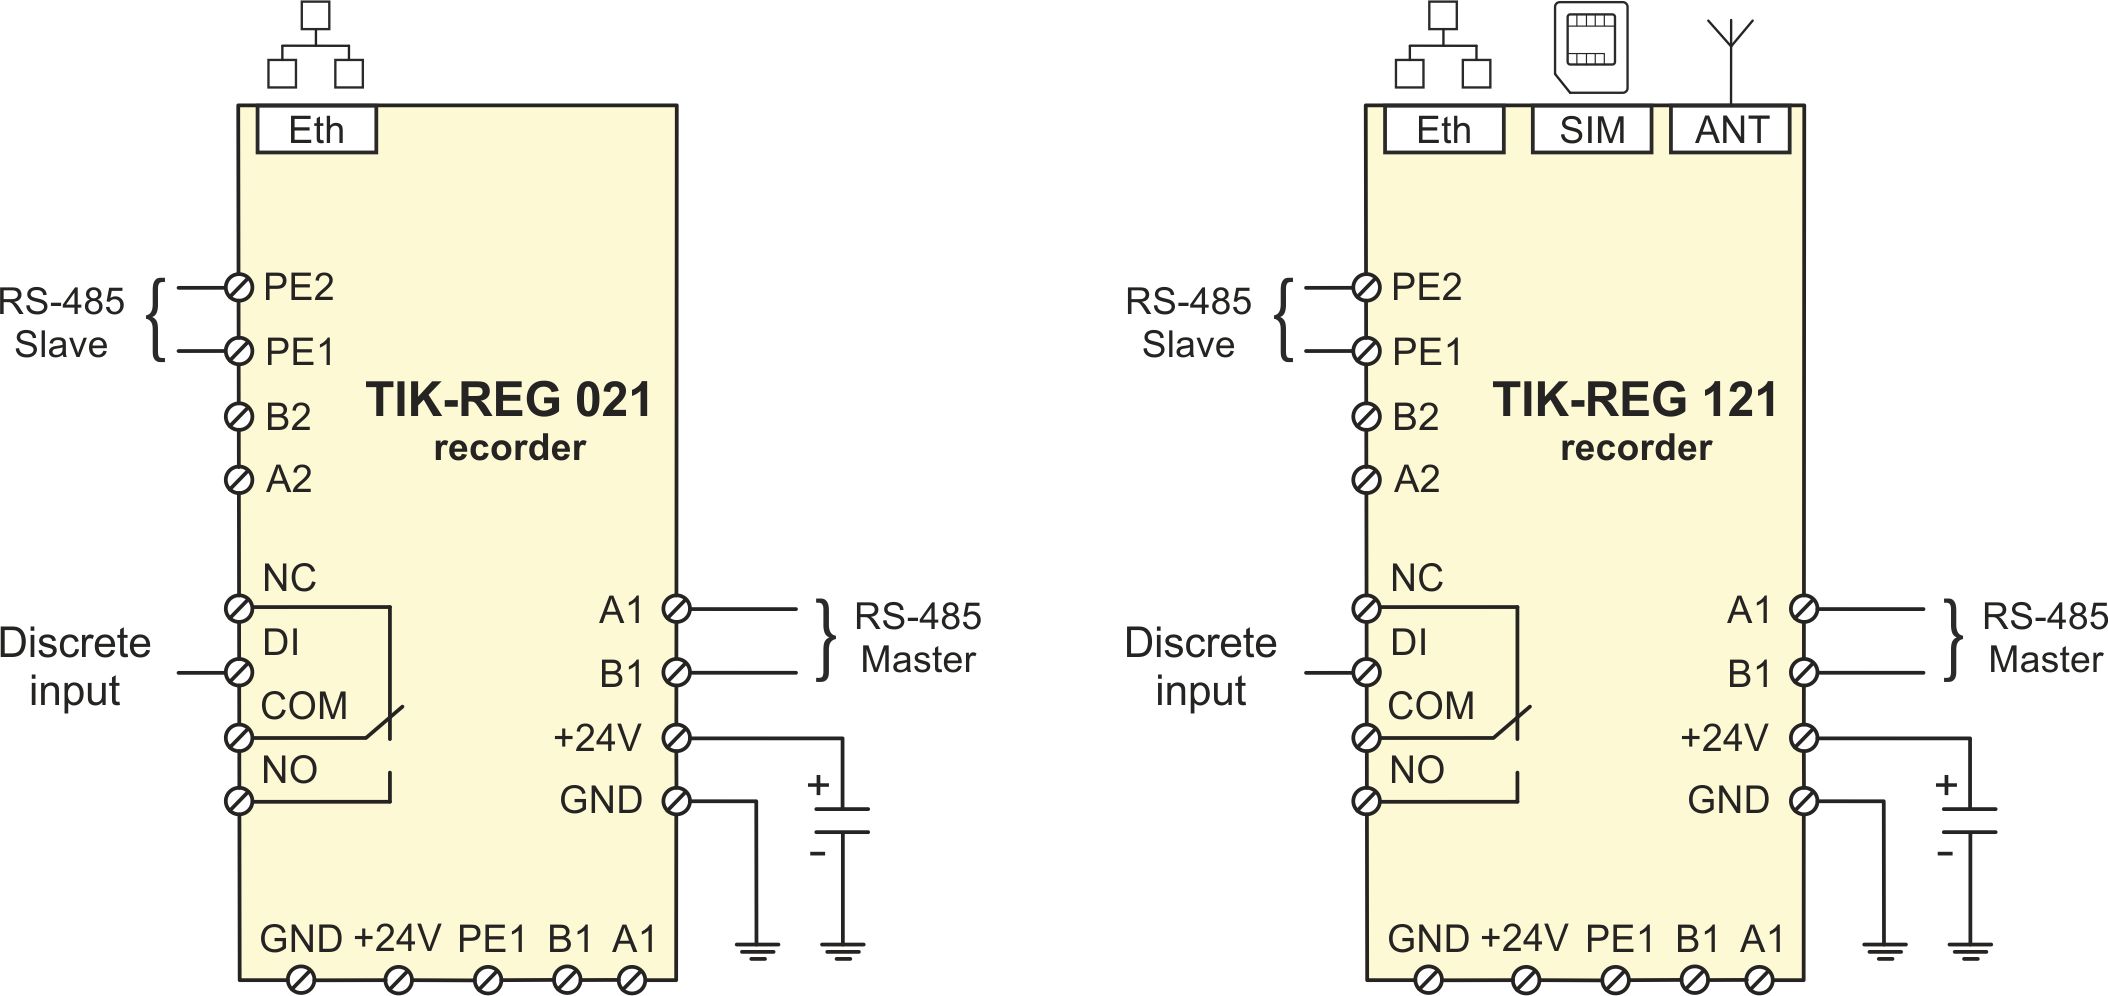 Connection schemes of TIK-REG recorder